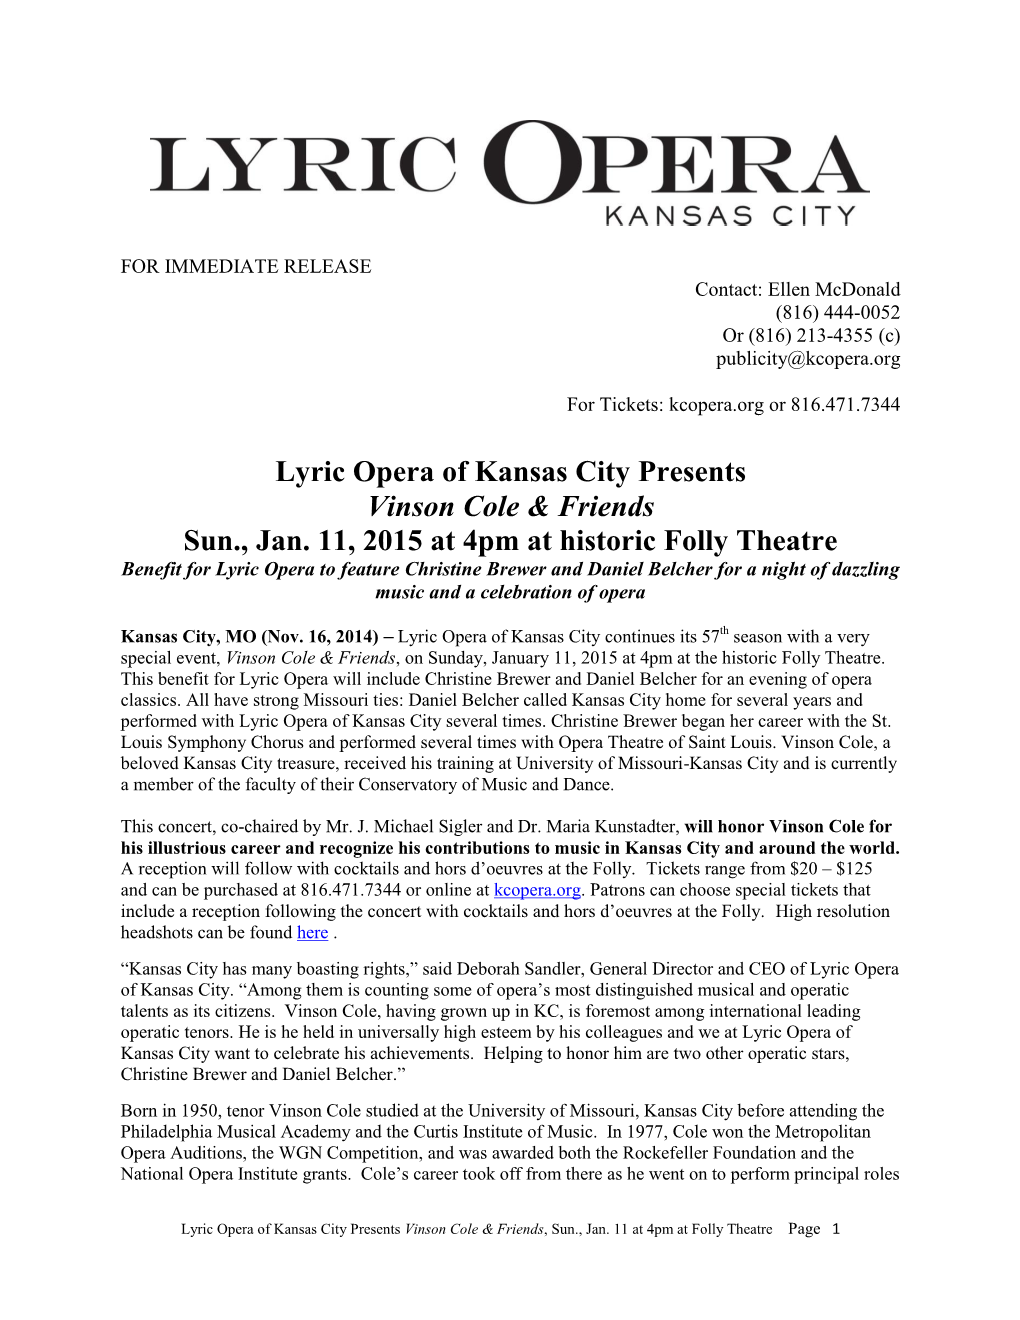 Lyric Opera of Kansas City Presents Vinson Cole & Friends, Sunday